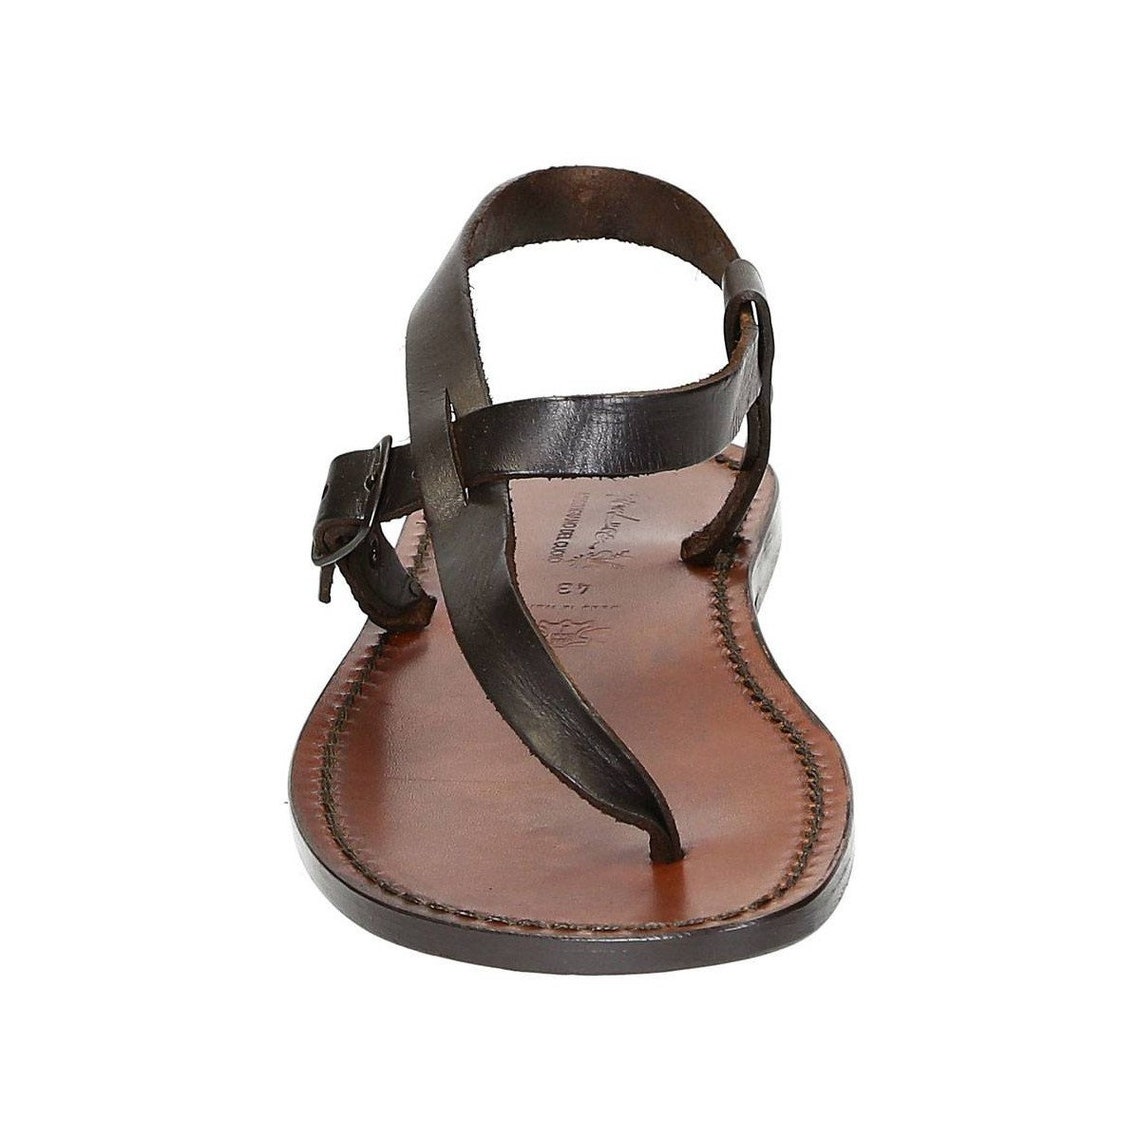 Handmade Brown Leather Thong Sandals for Men Gianluca | Etsy